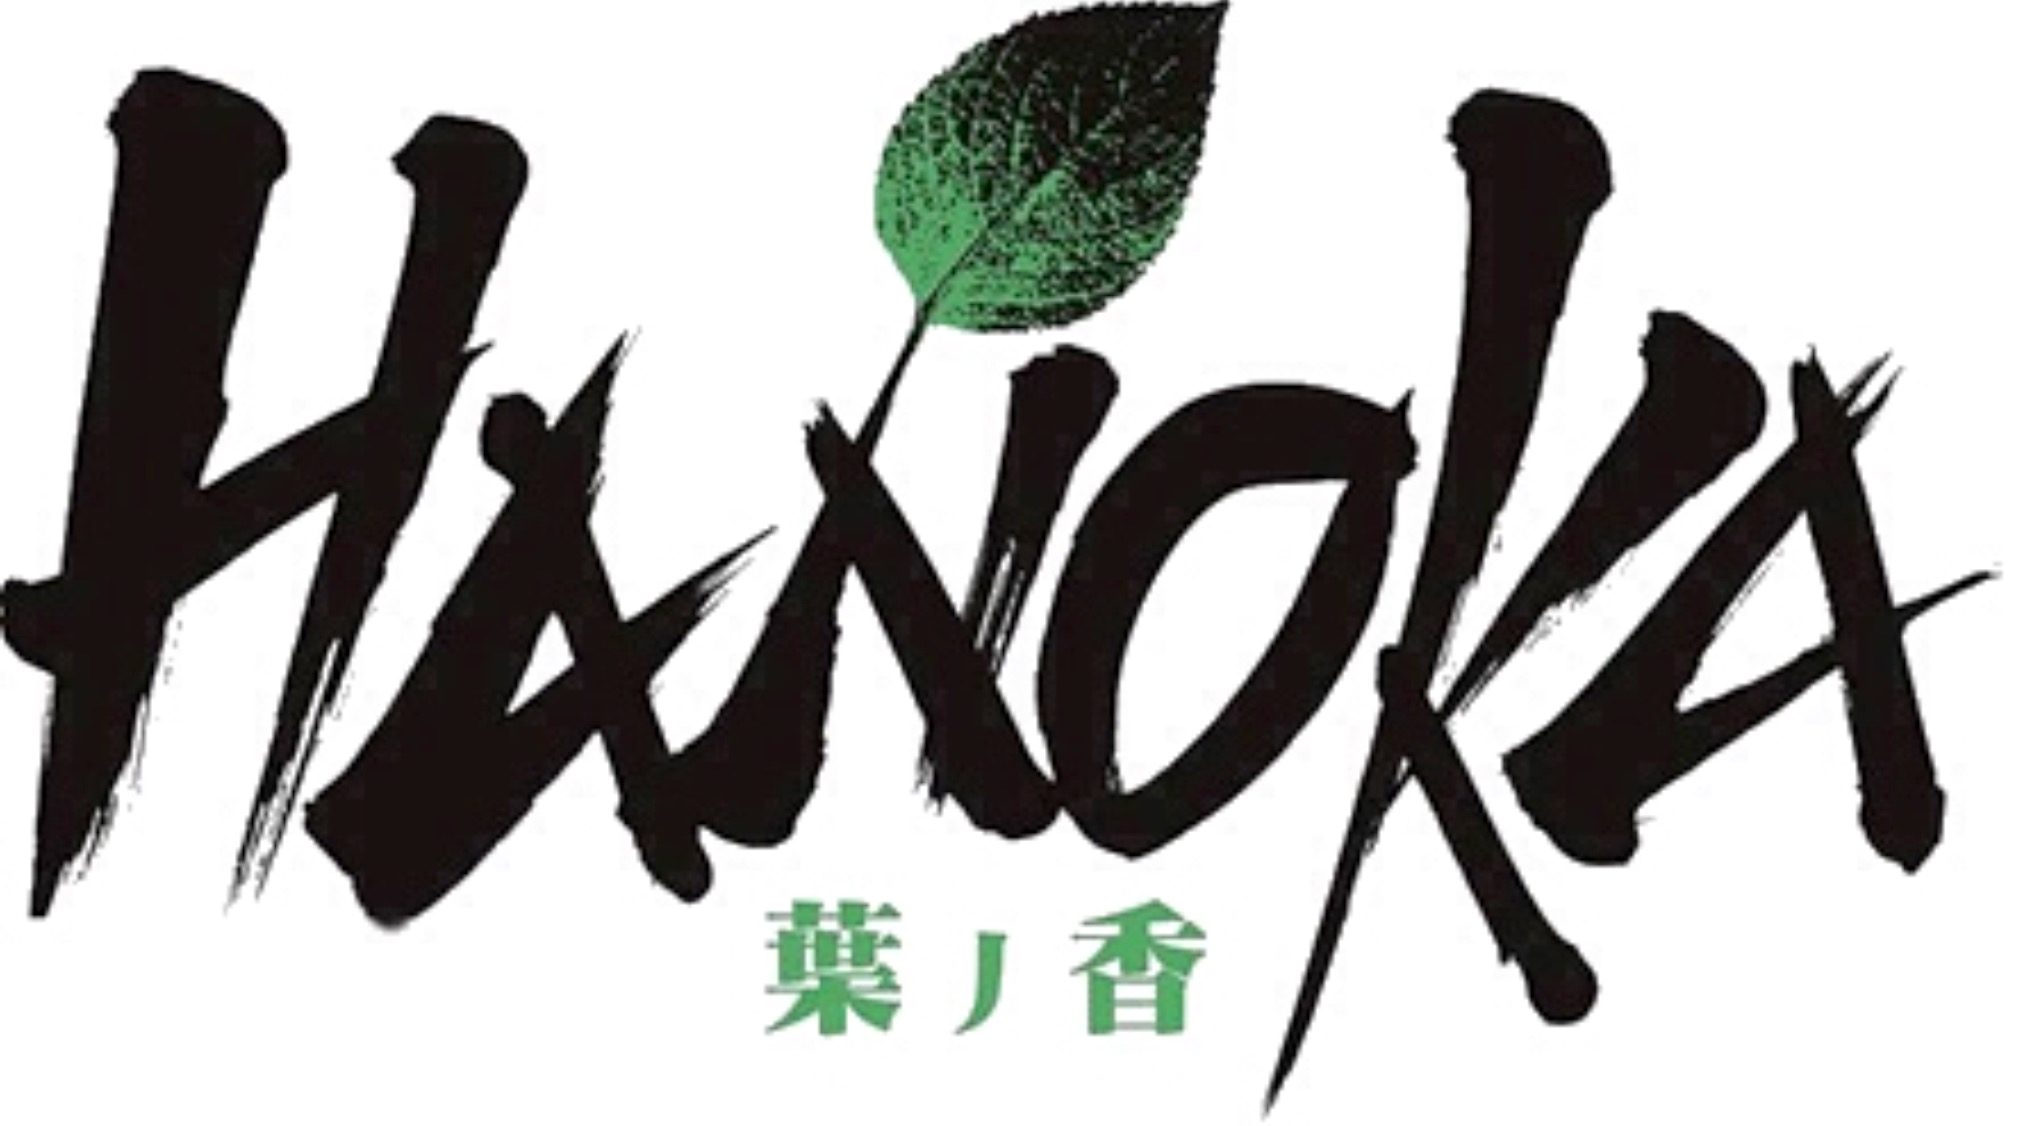 Hanoka logo.jpg